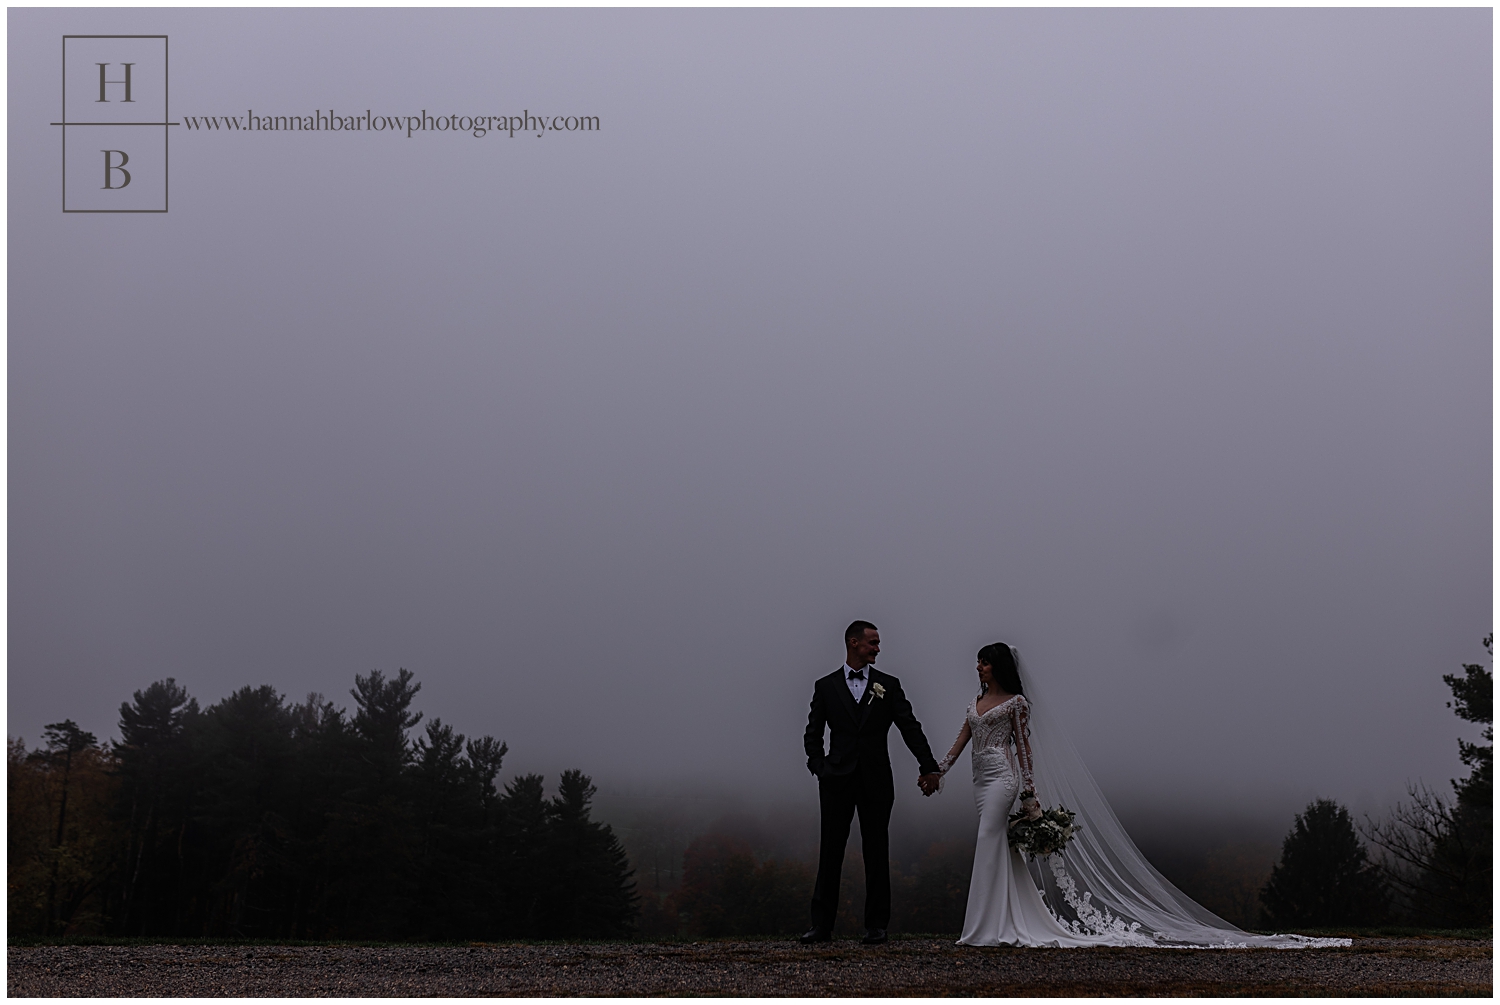 Dark foggy wedding photo of bride and groom